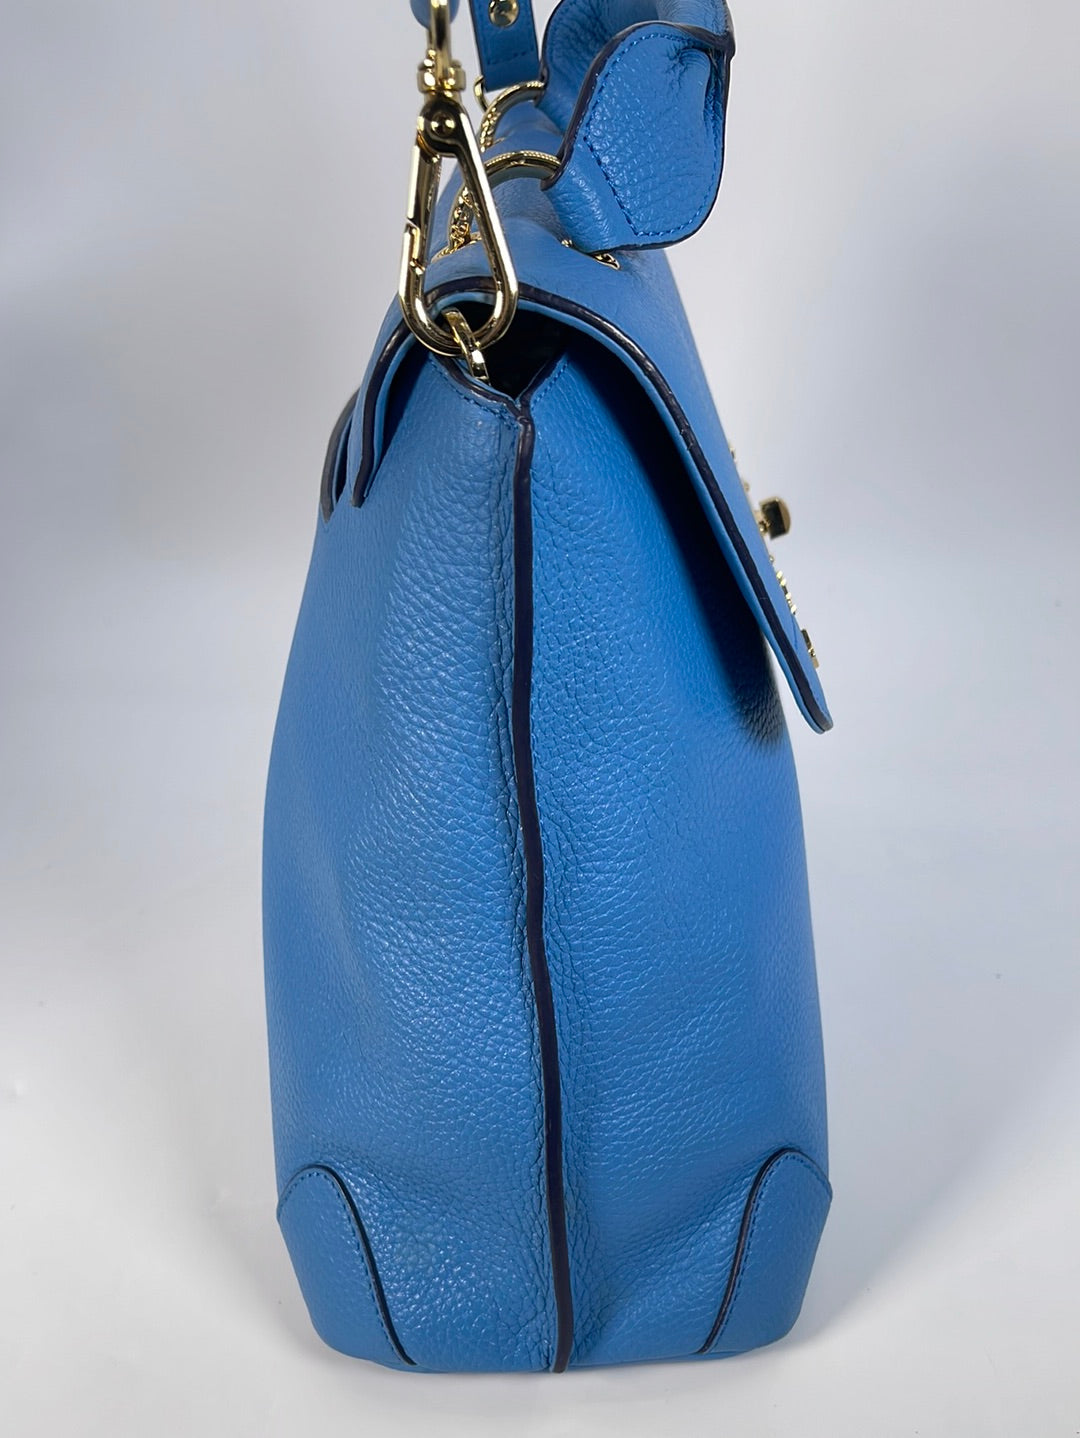 PRELOVED MCM Blue Leather First Lady Satchel Crossbody Bag J7177 052423 $100 OFF LIVE SHOW